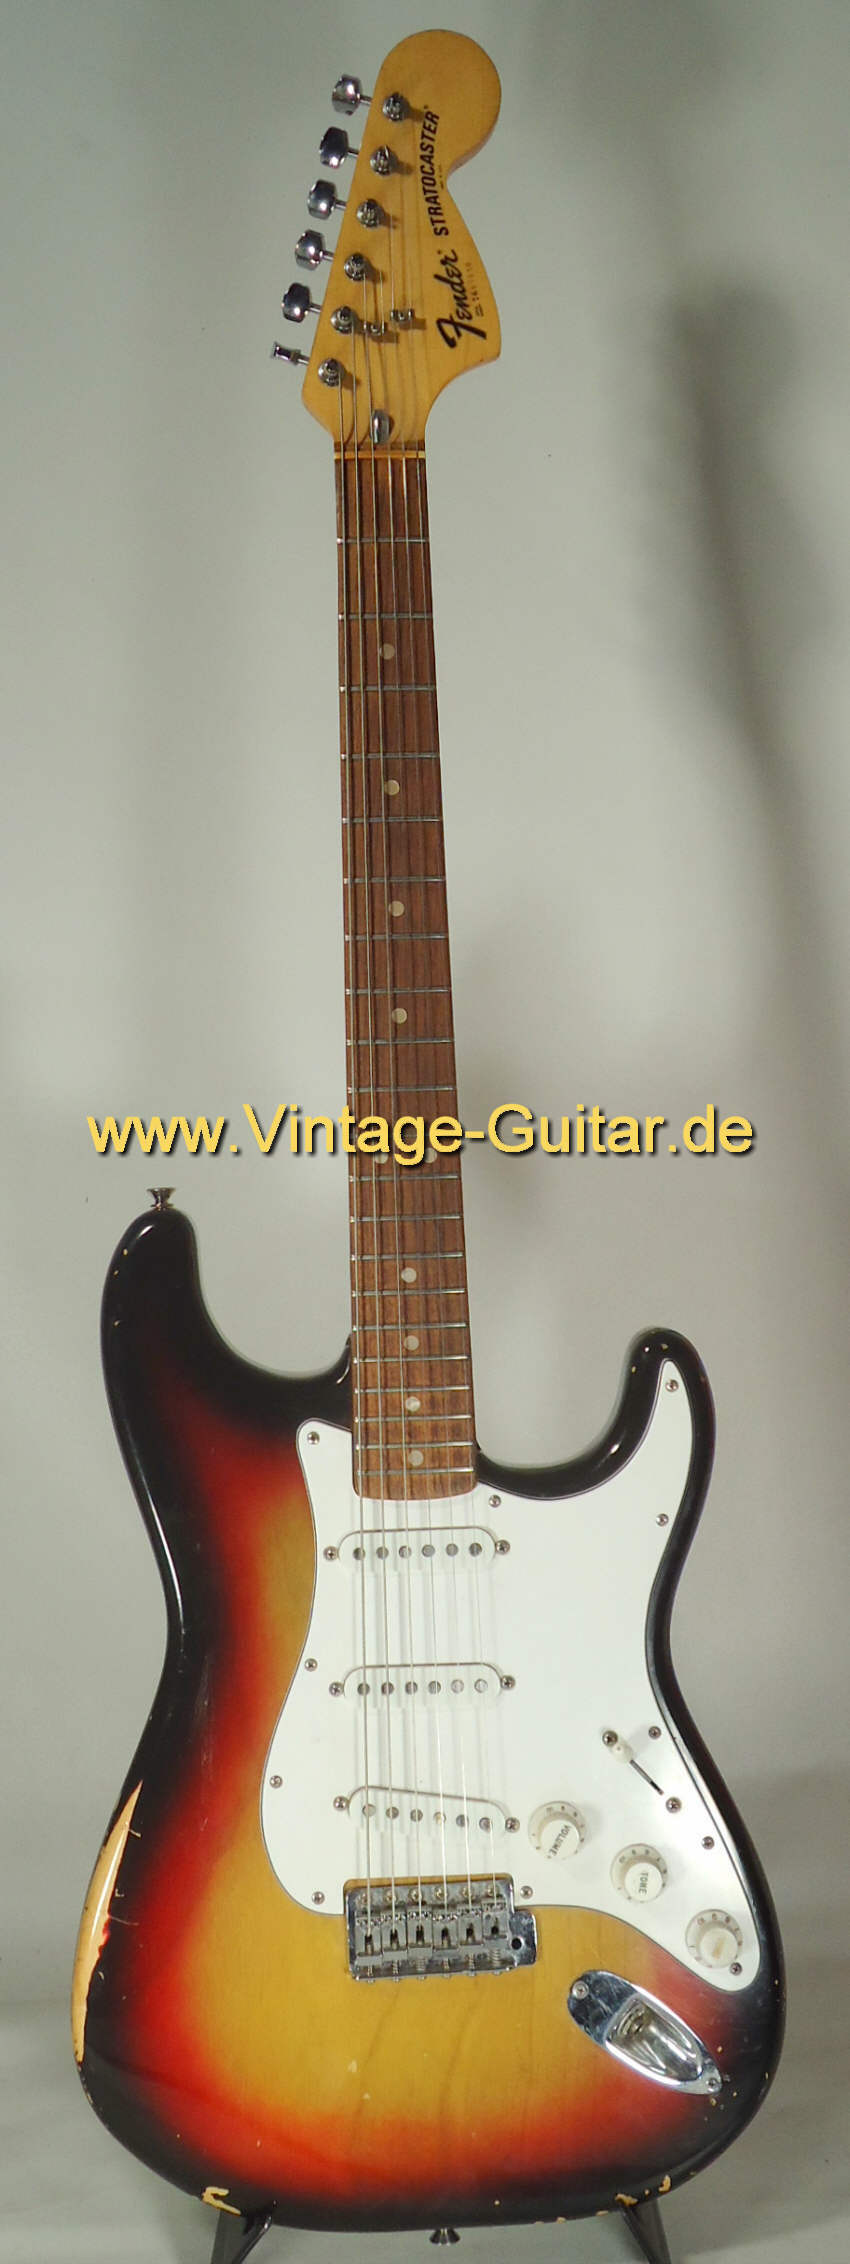 Fender Stratocaster 1976 sunburst white parts a.jpg